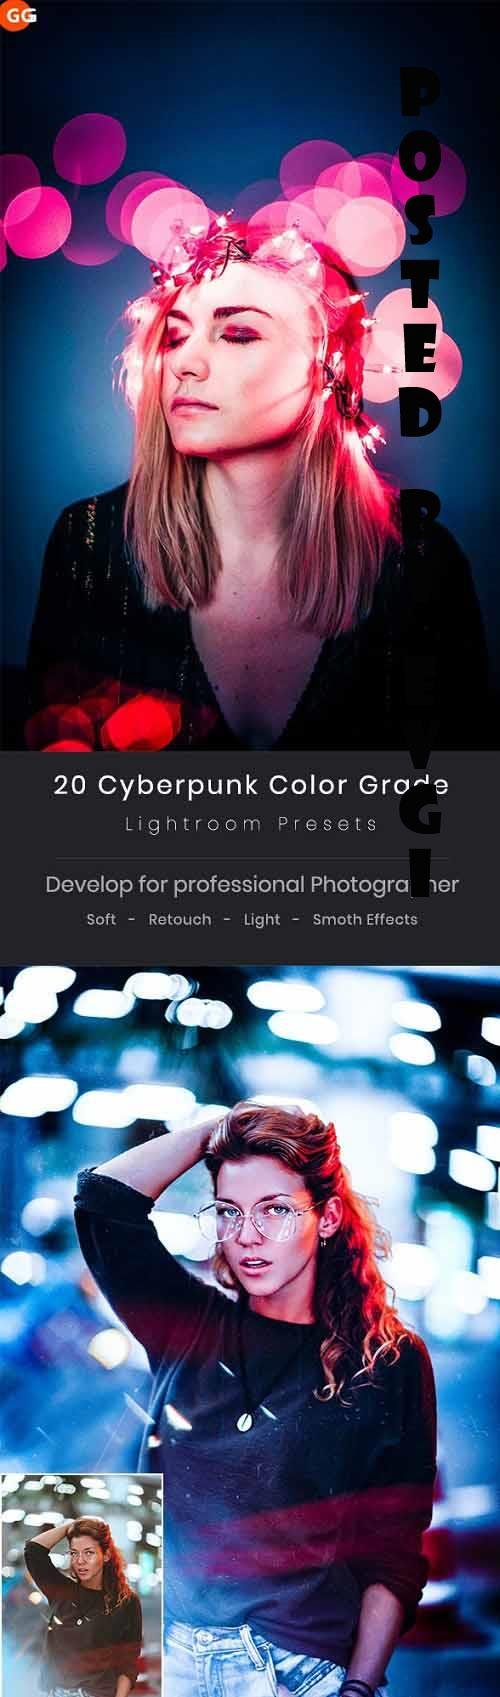 20 Cyberpunk Color Grade Lightroom Presets - 35394195